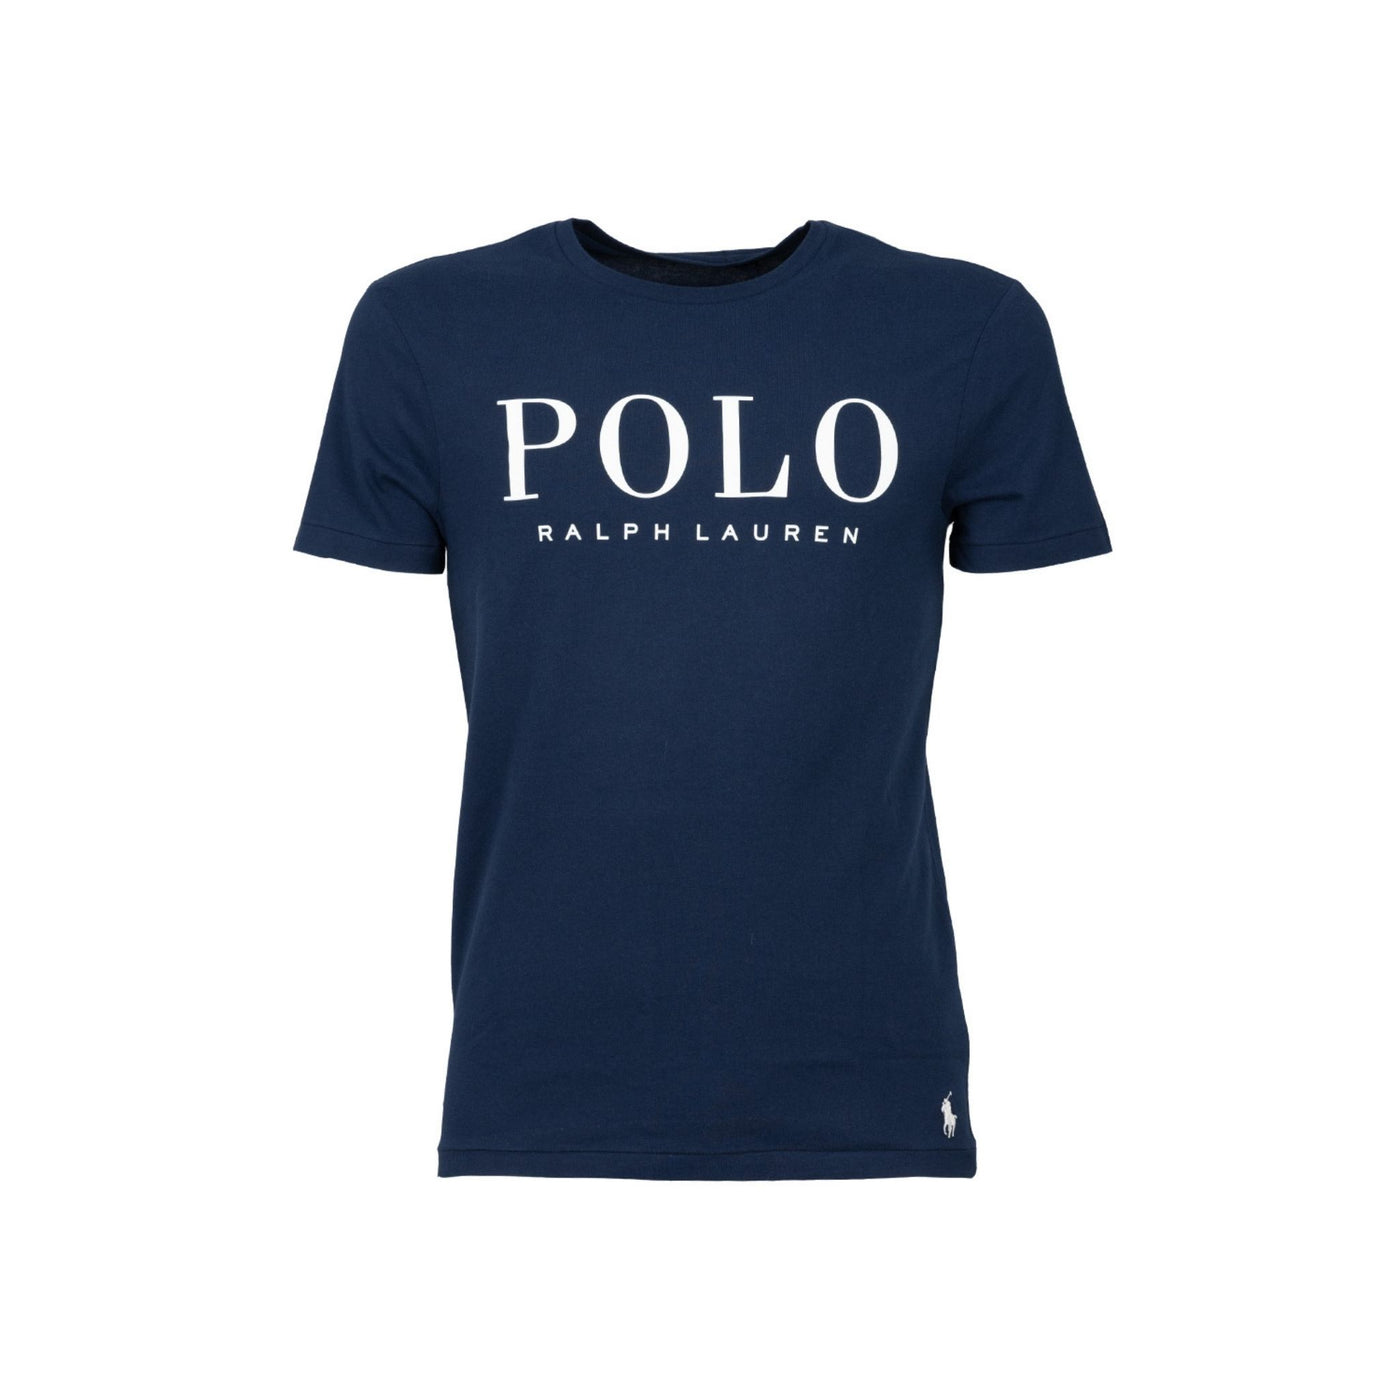 T-shirt uomo blu navy Polo Ralph Lauren vista frontale